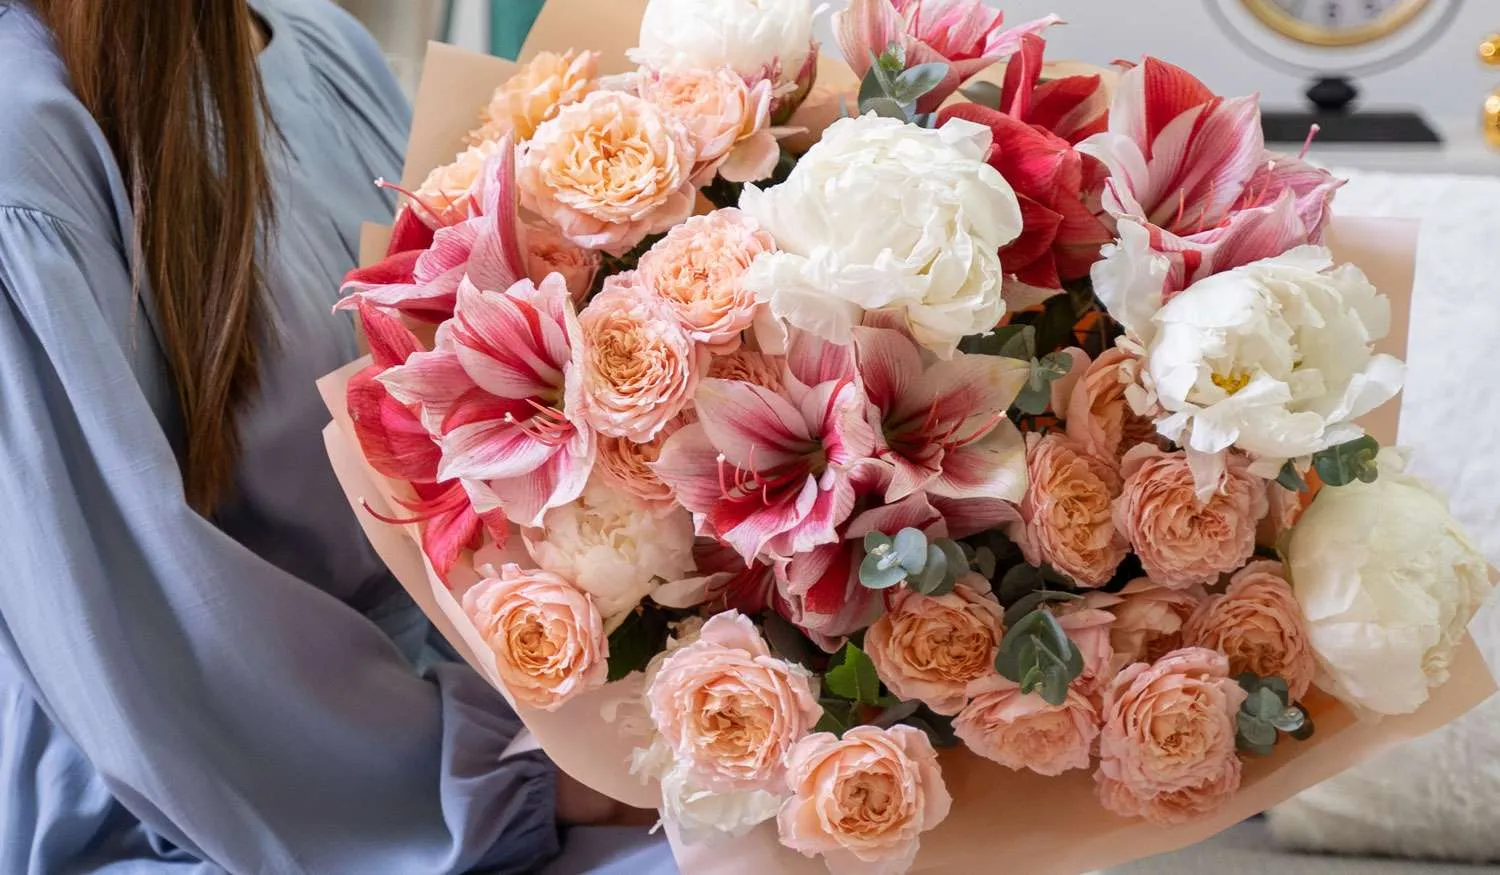 Birthday flower box, artifical roses - Happy birthday topper